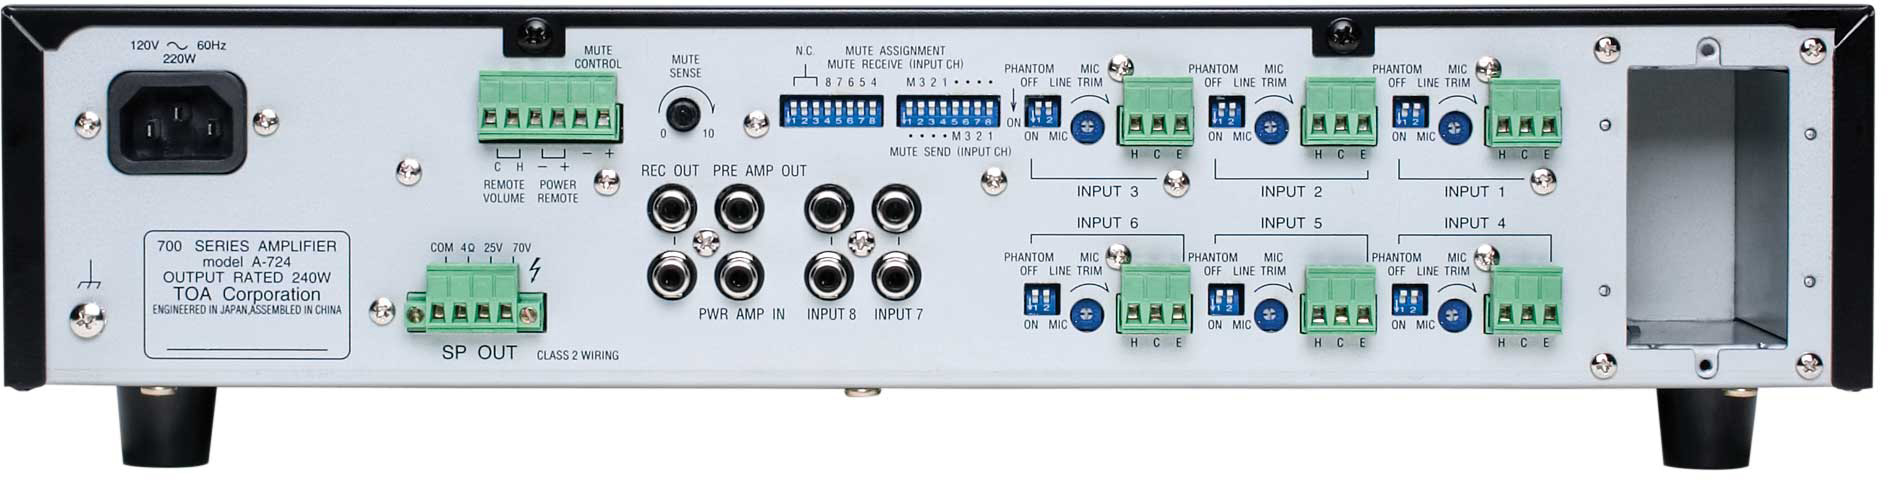 TOA A-706 60W Mixer Amplifier w/6 Mic/Line Aux and Module Slot 2RU